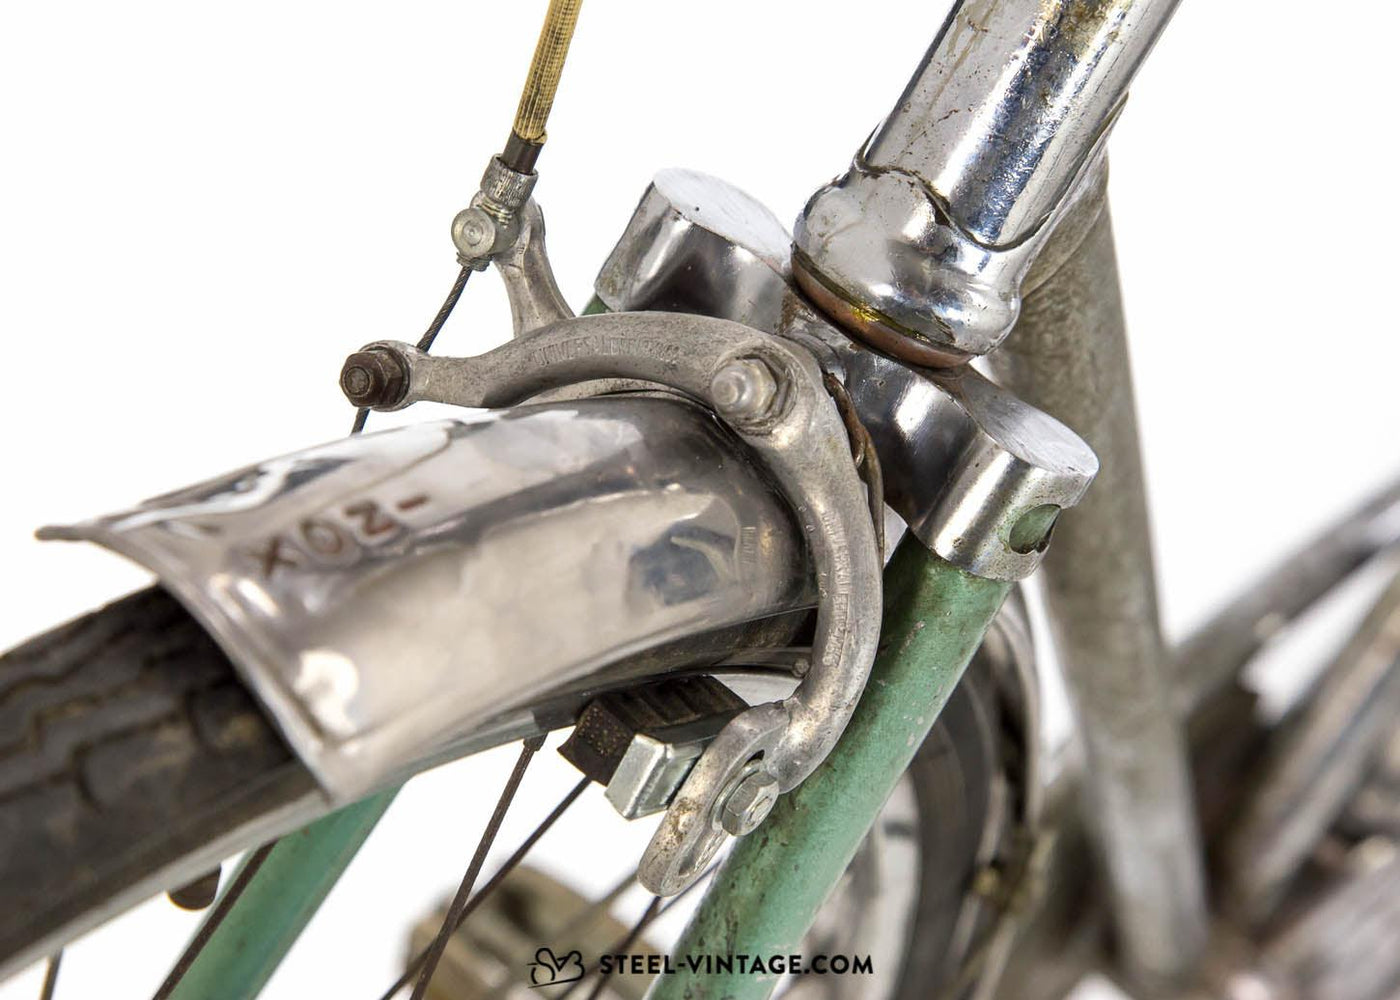 Sala La Brianzola Sports Bike 1950s - Steel Vintage Bikes